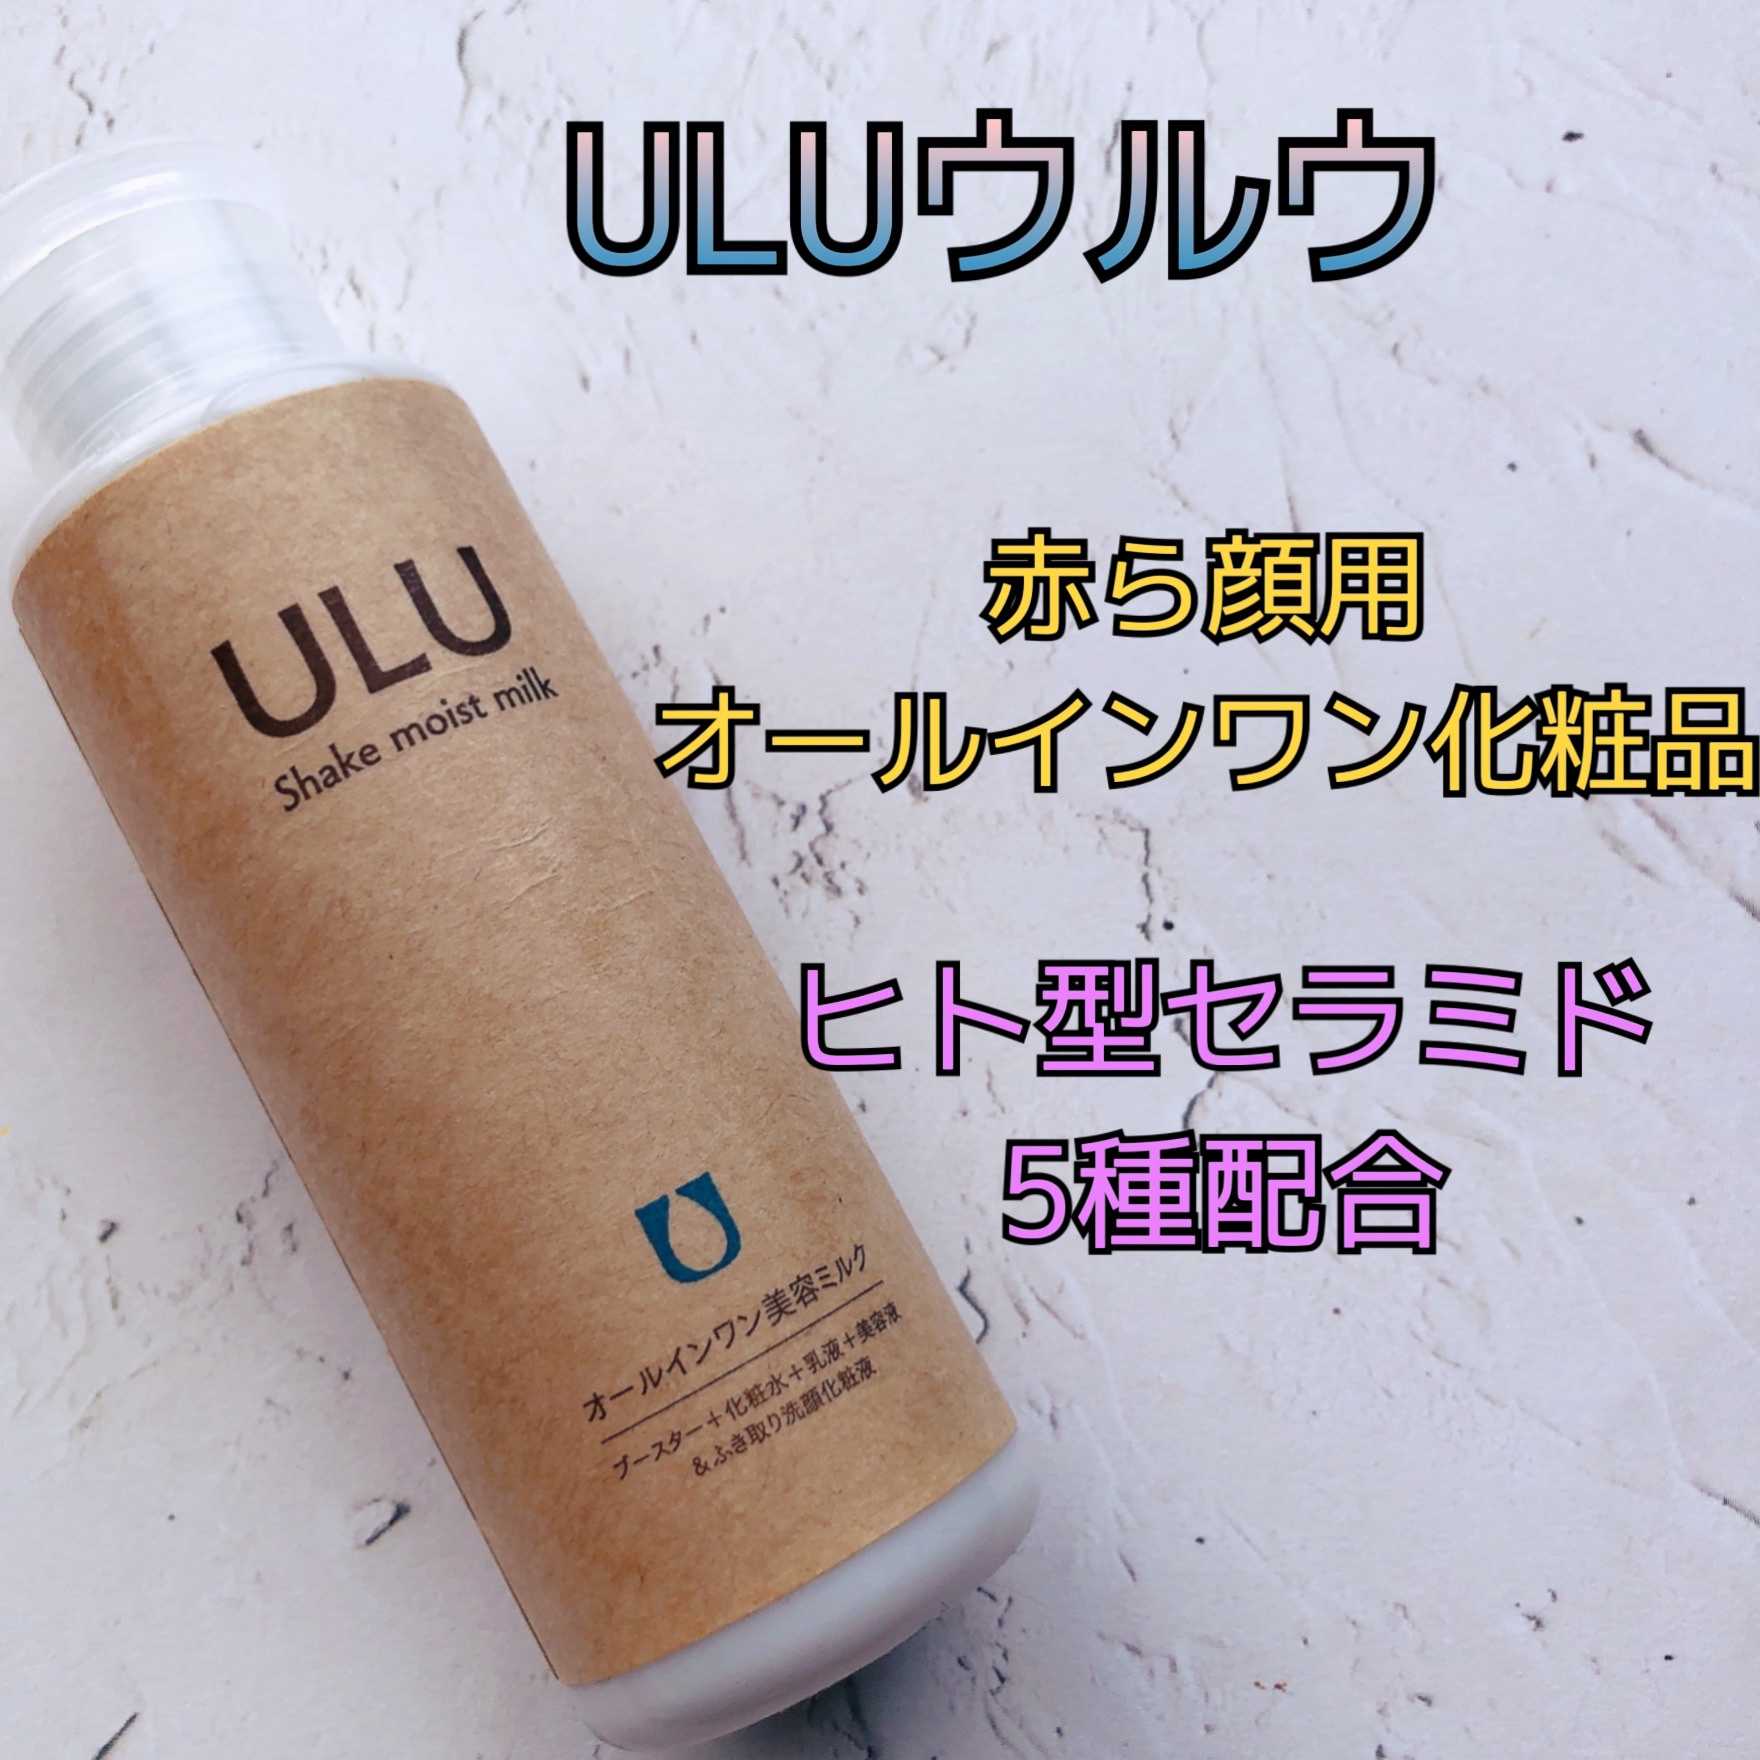 ULU FREE シェイクモイストミルク 240mL - 乳液・ミルク